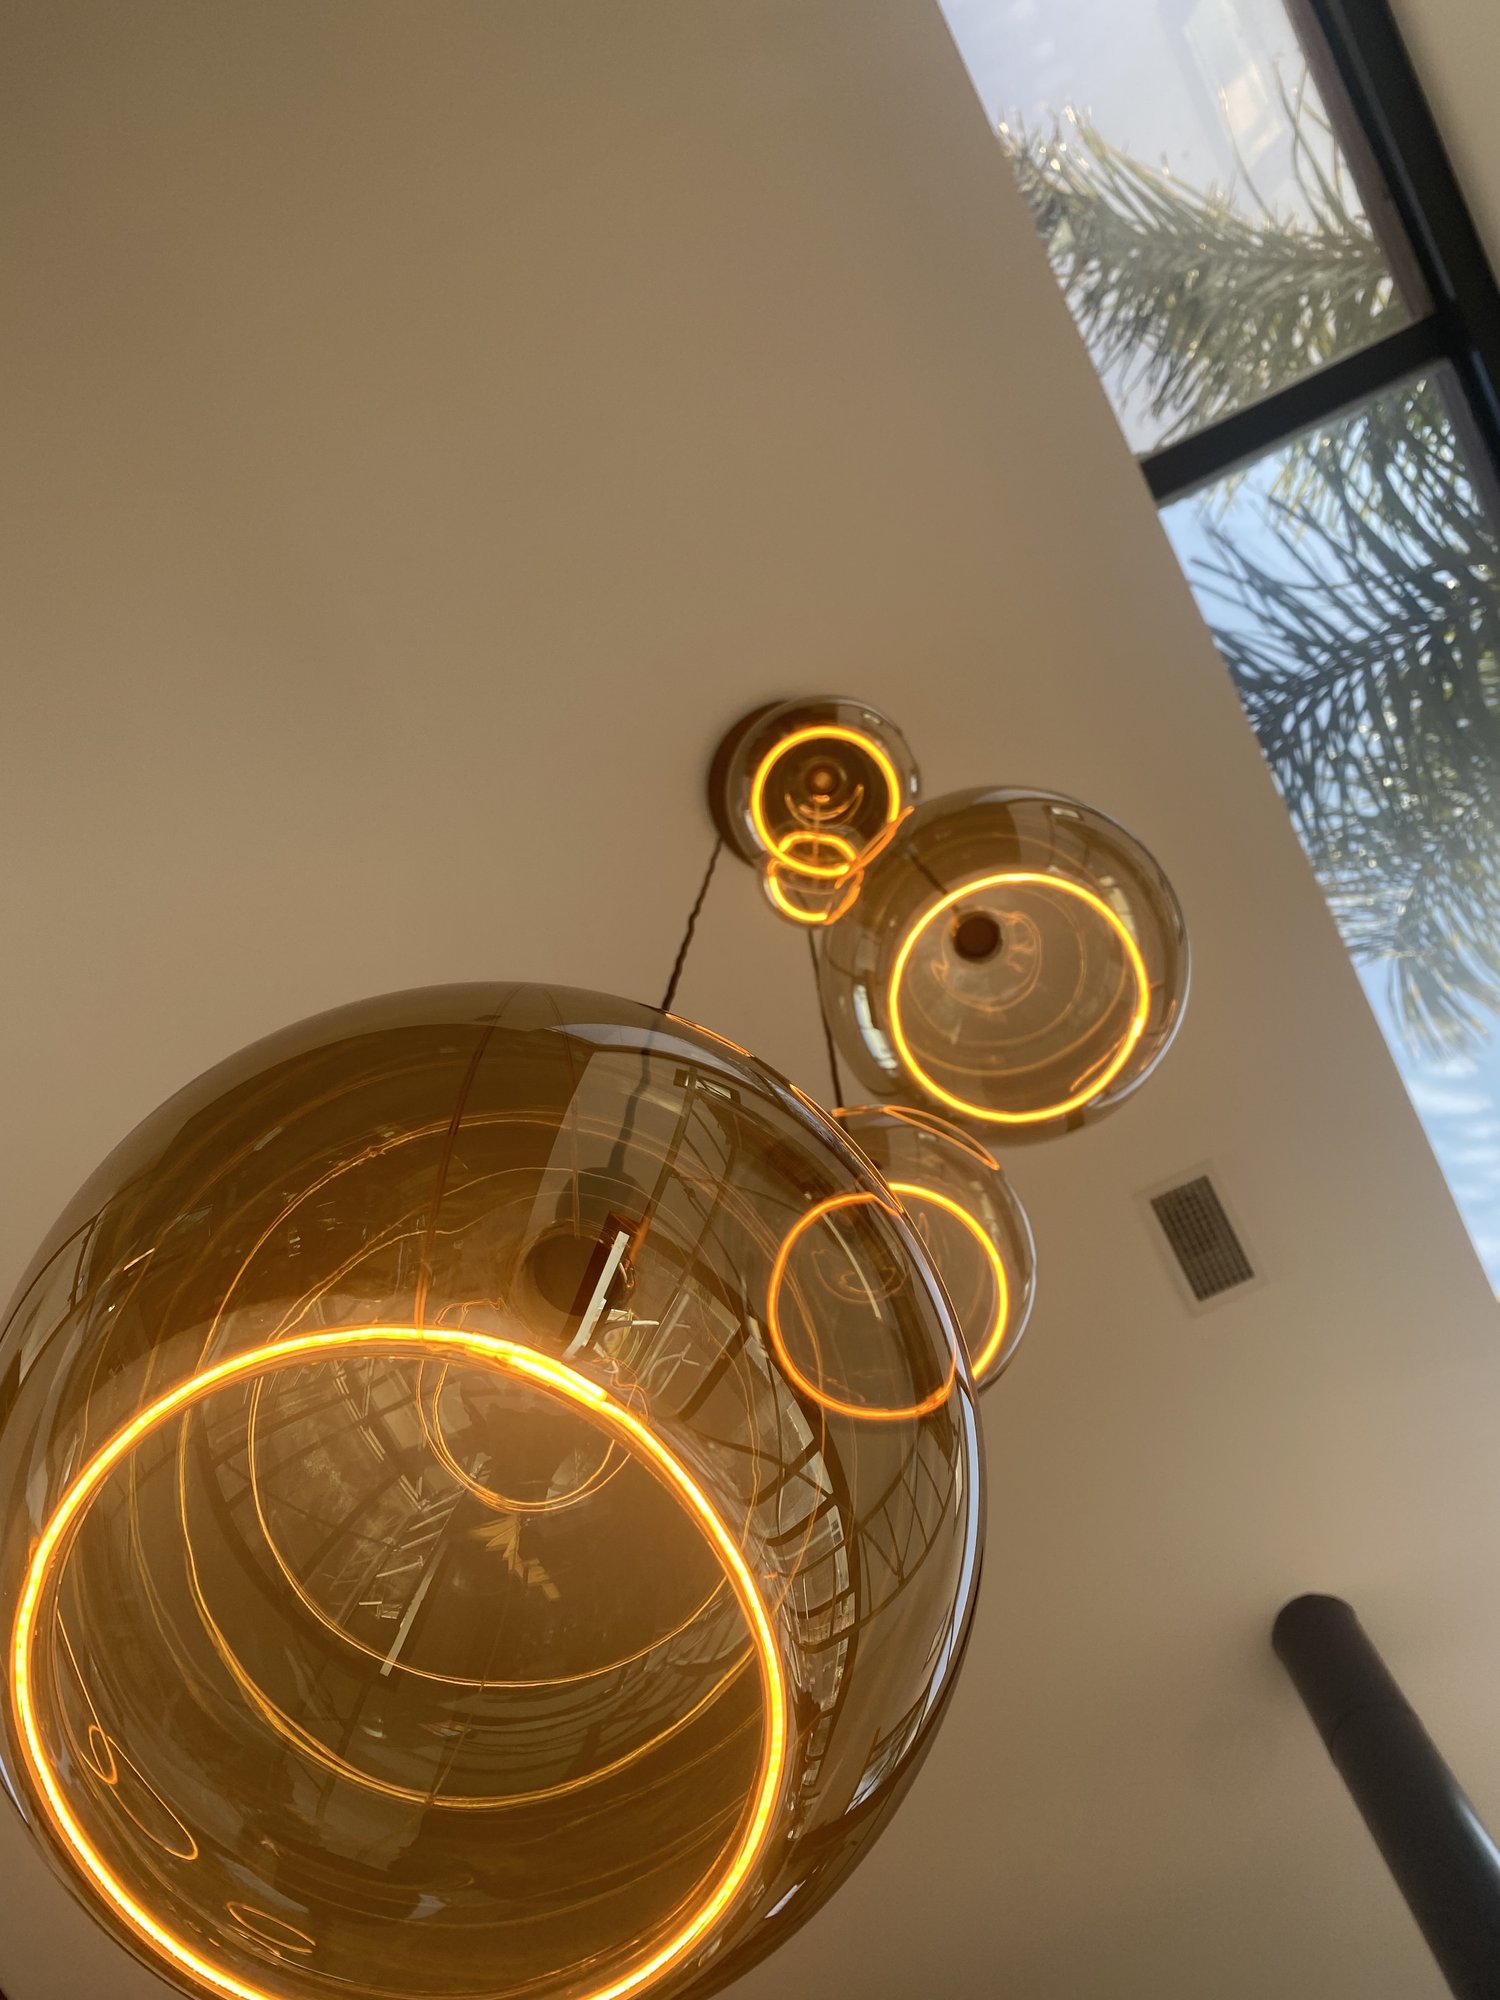 Ampoule LED Ambrée Floating Globe Smokey 125mm – Hoopzi